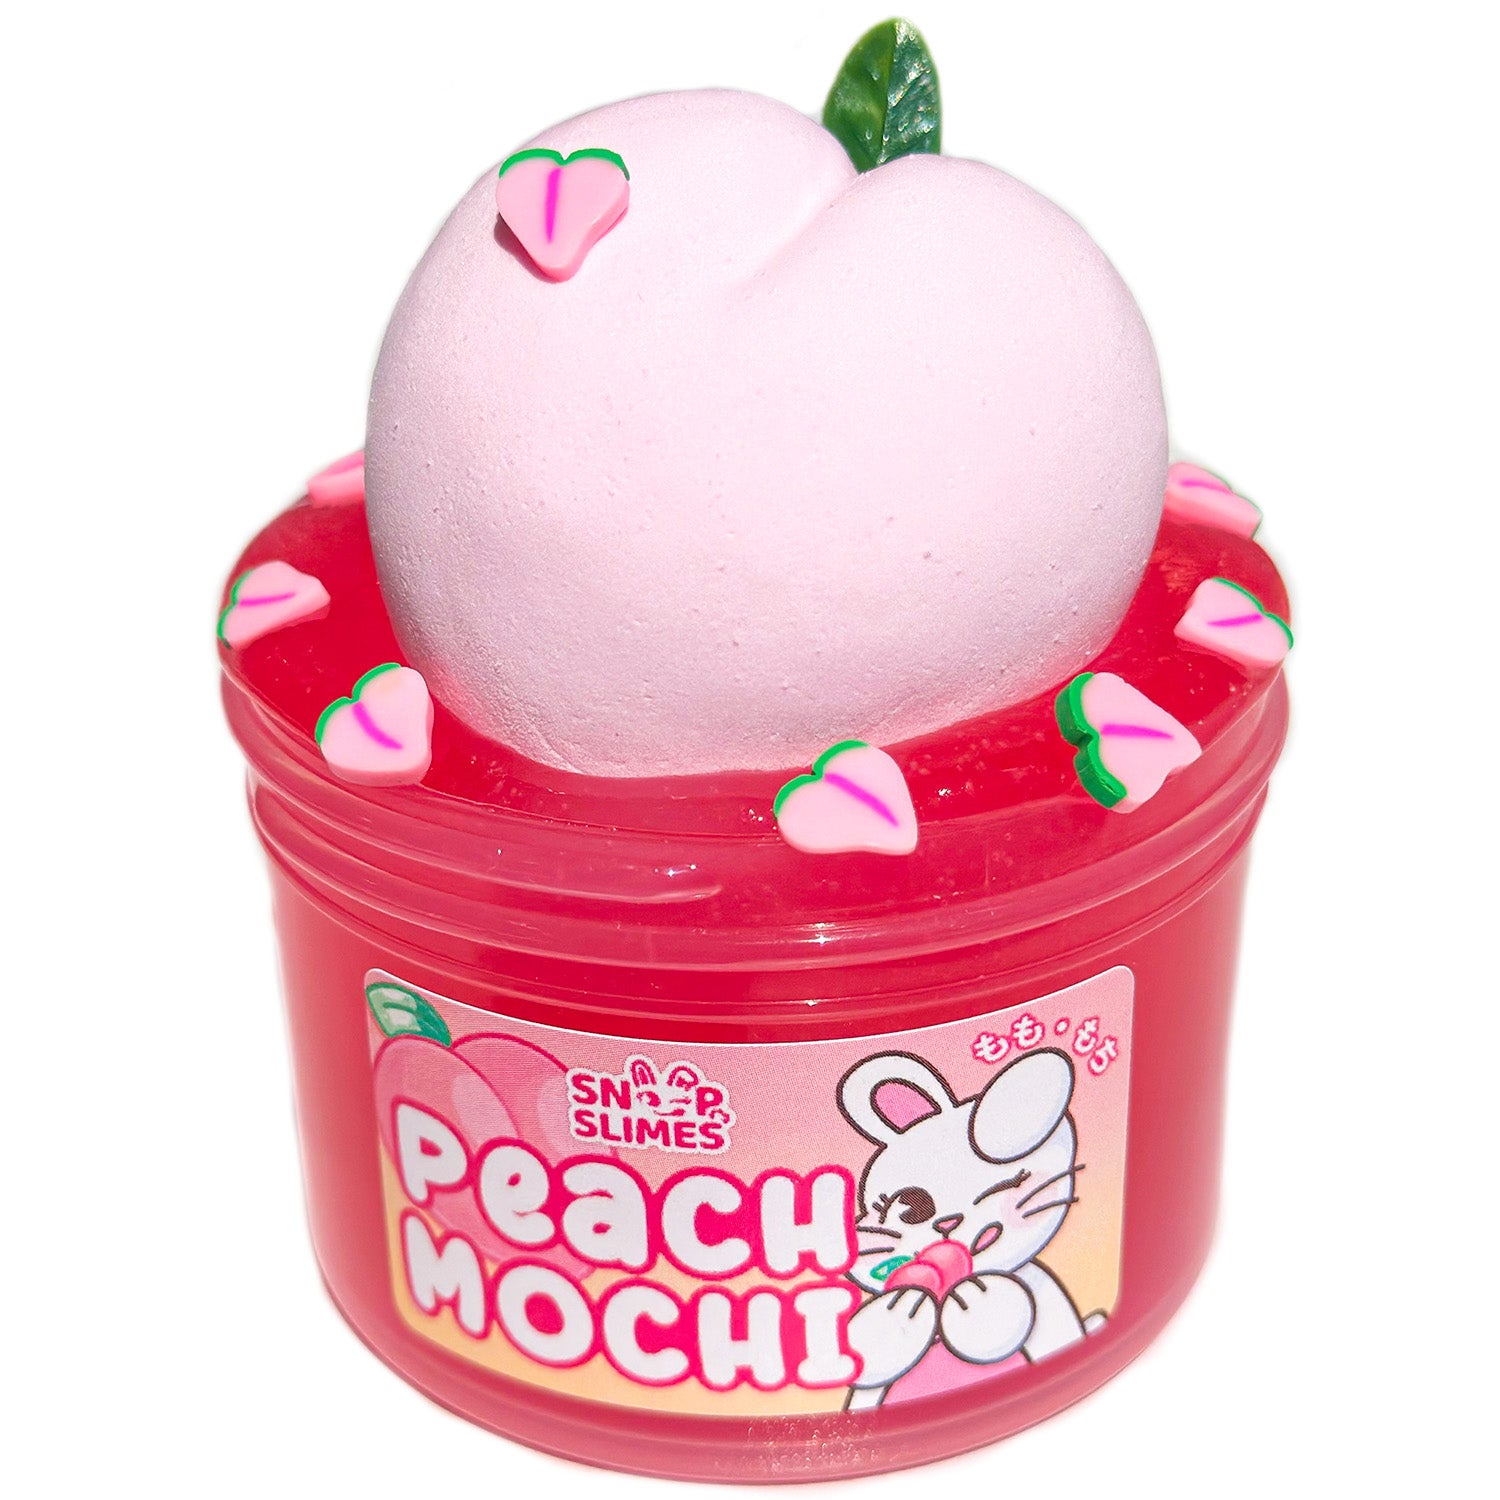 Peach Mochi Slime